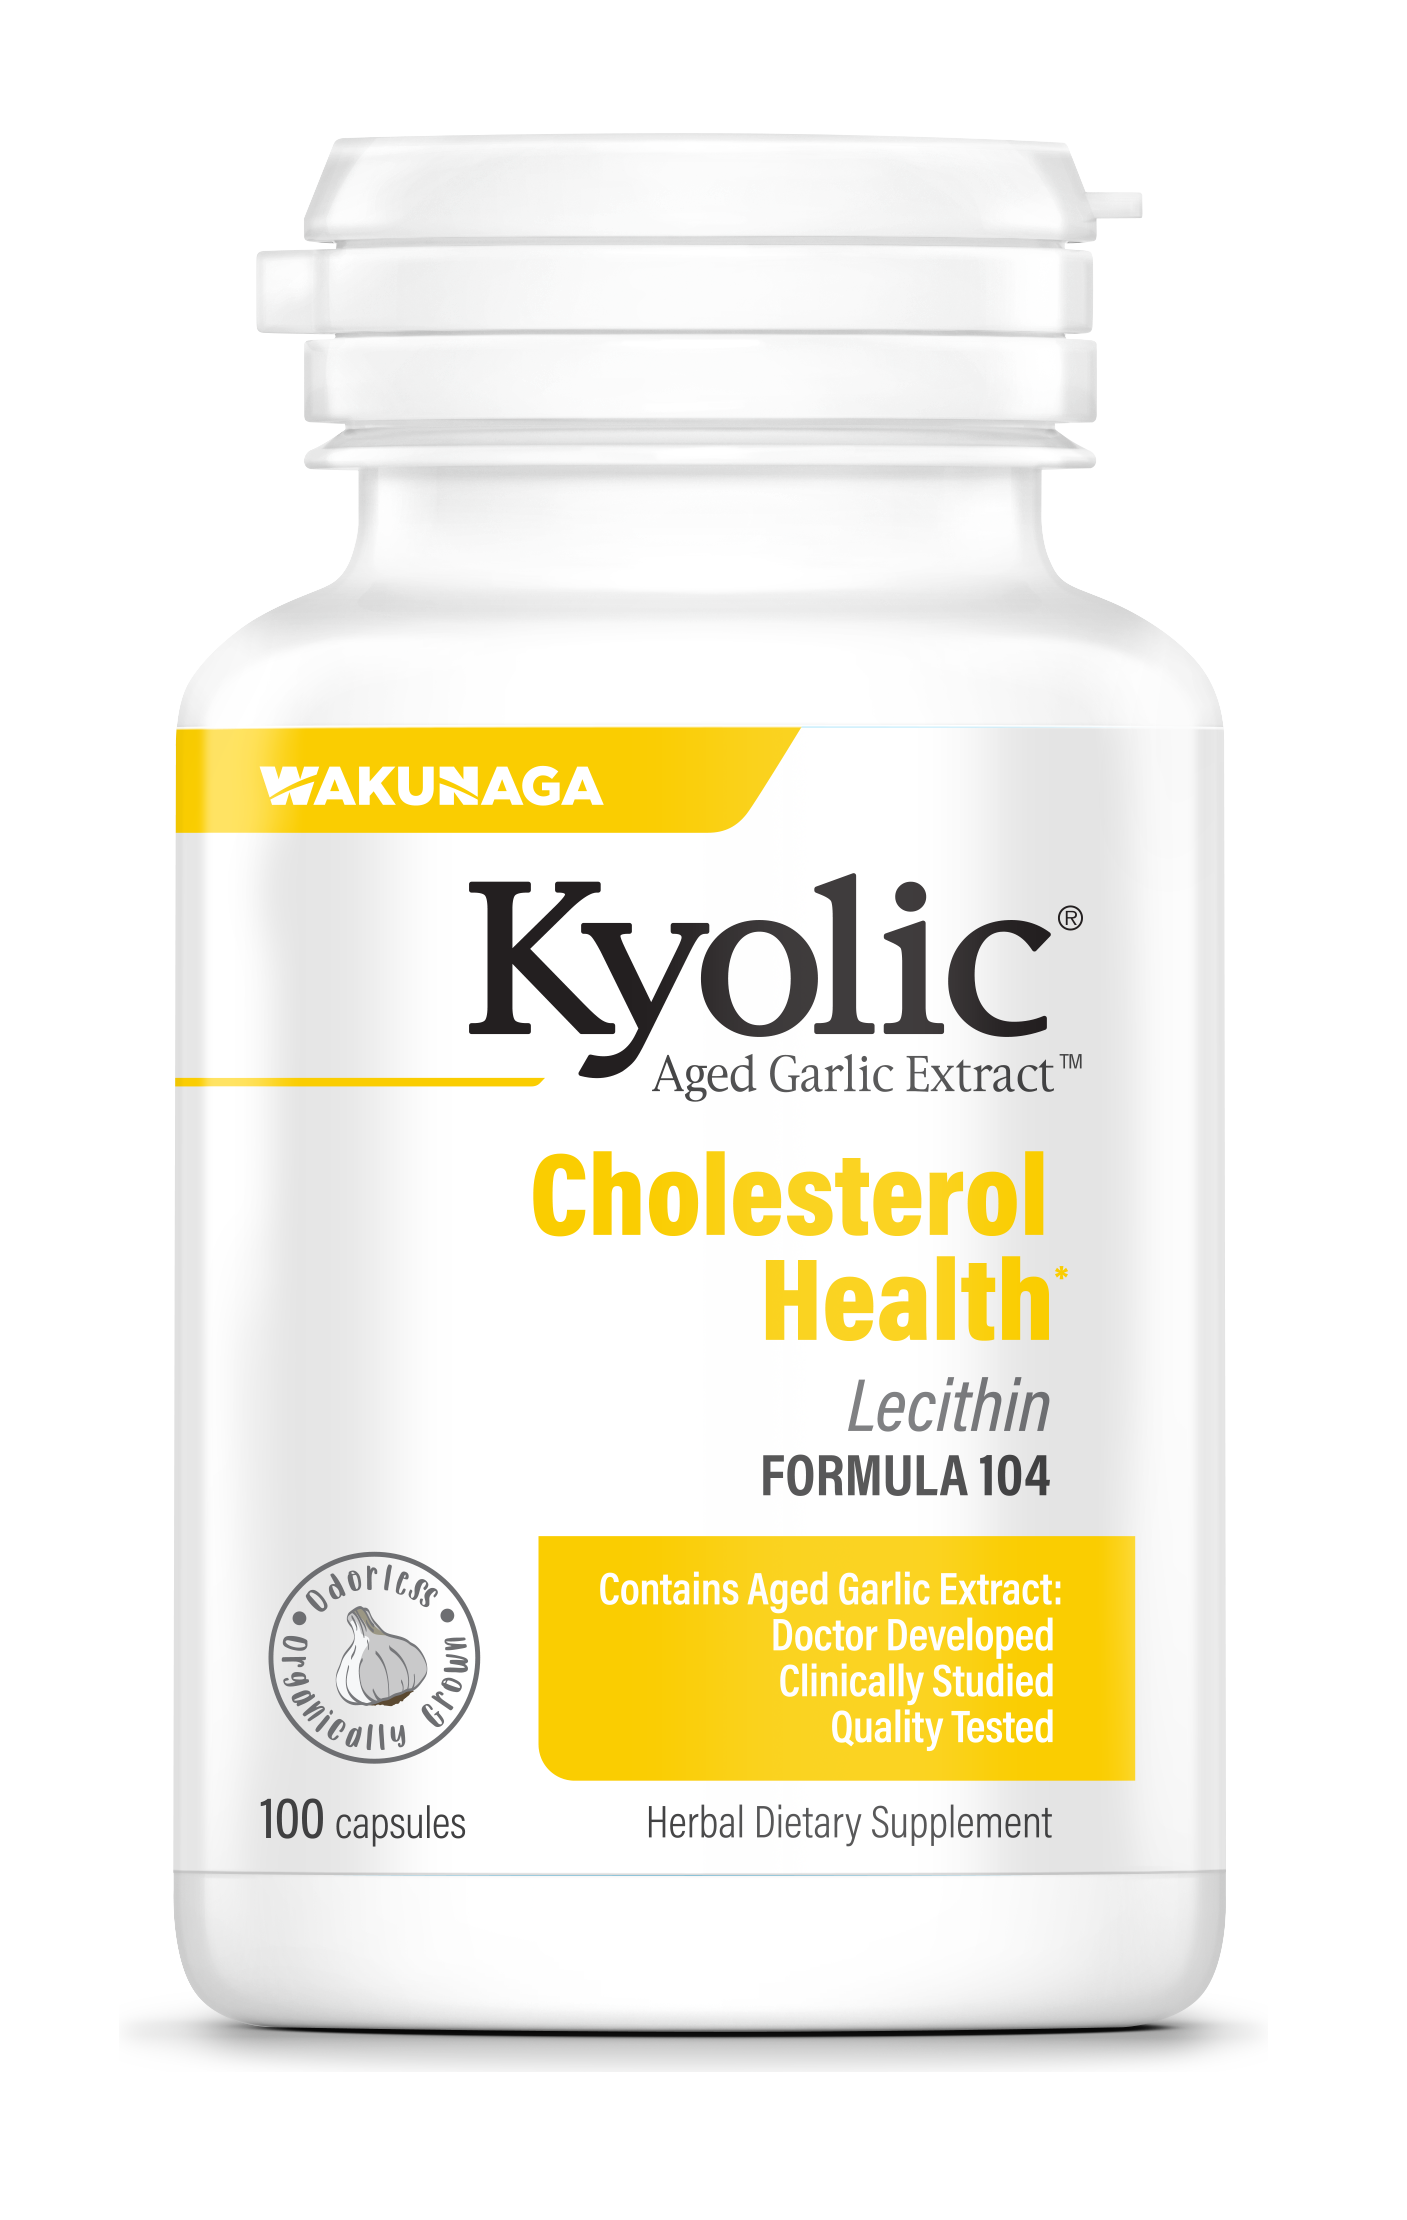 Kyolic® Aged Garlic Extract™ Cholesterol*